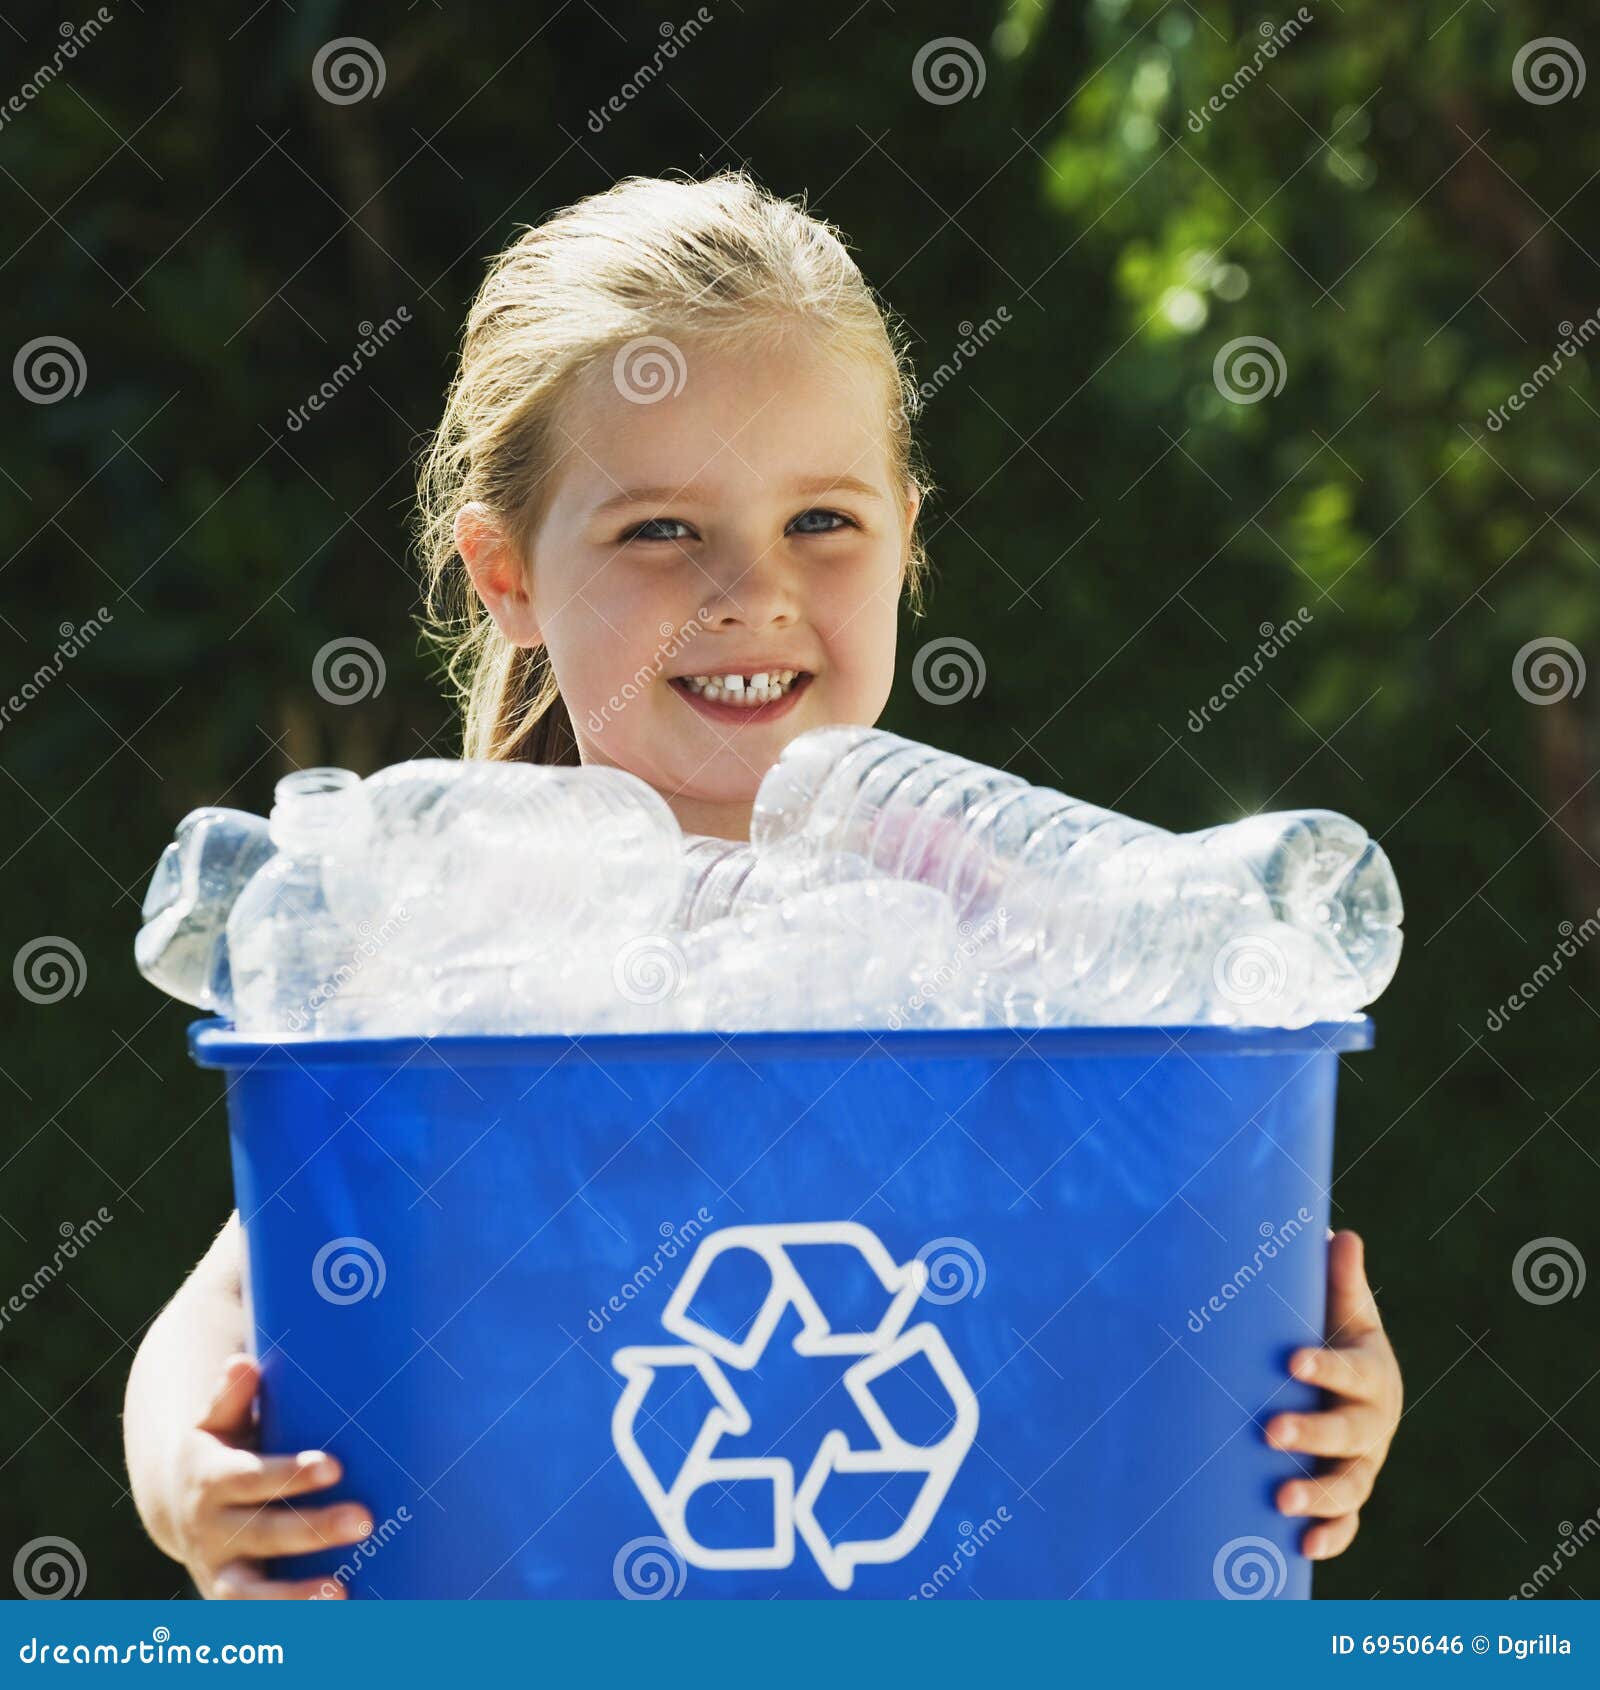 little girl holding recycling bin